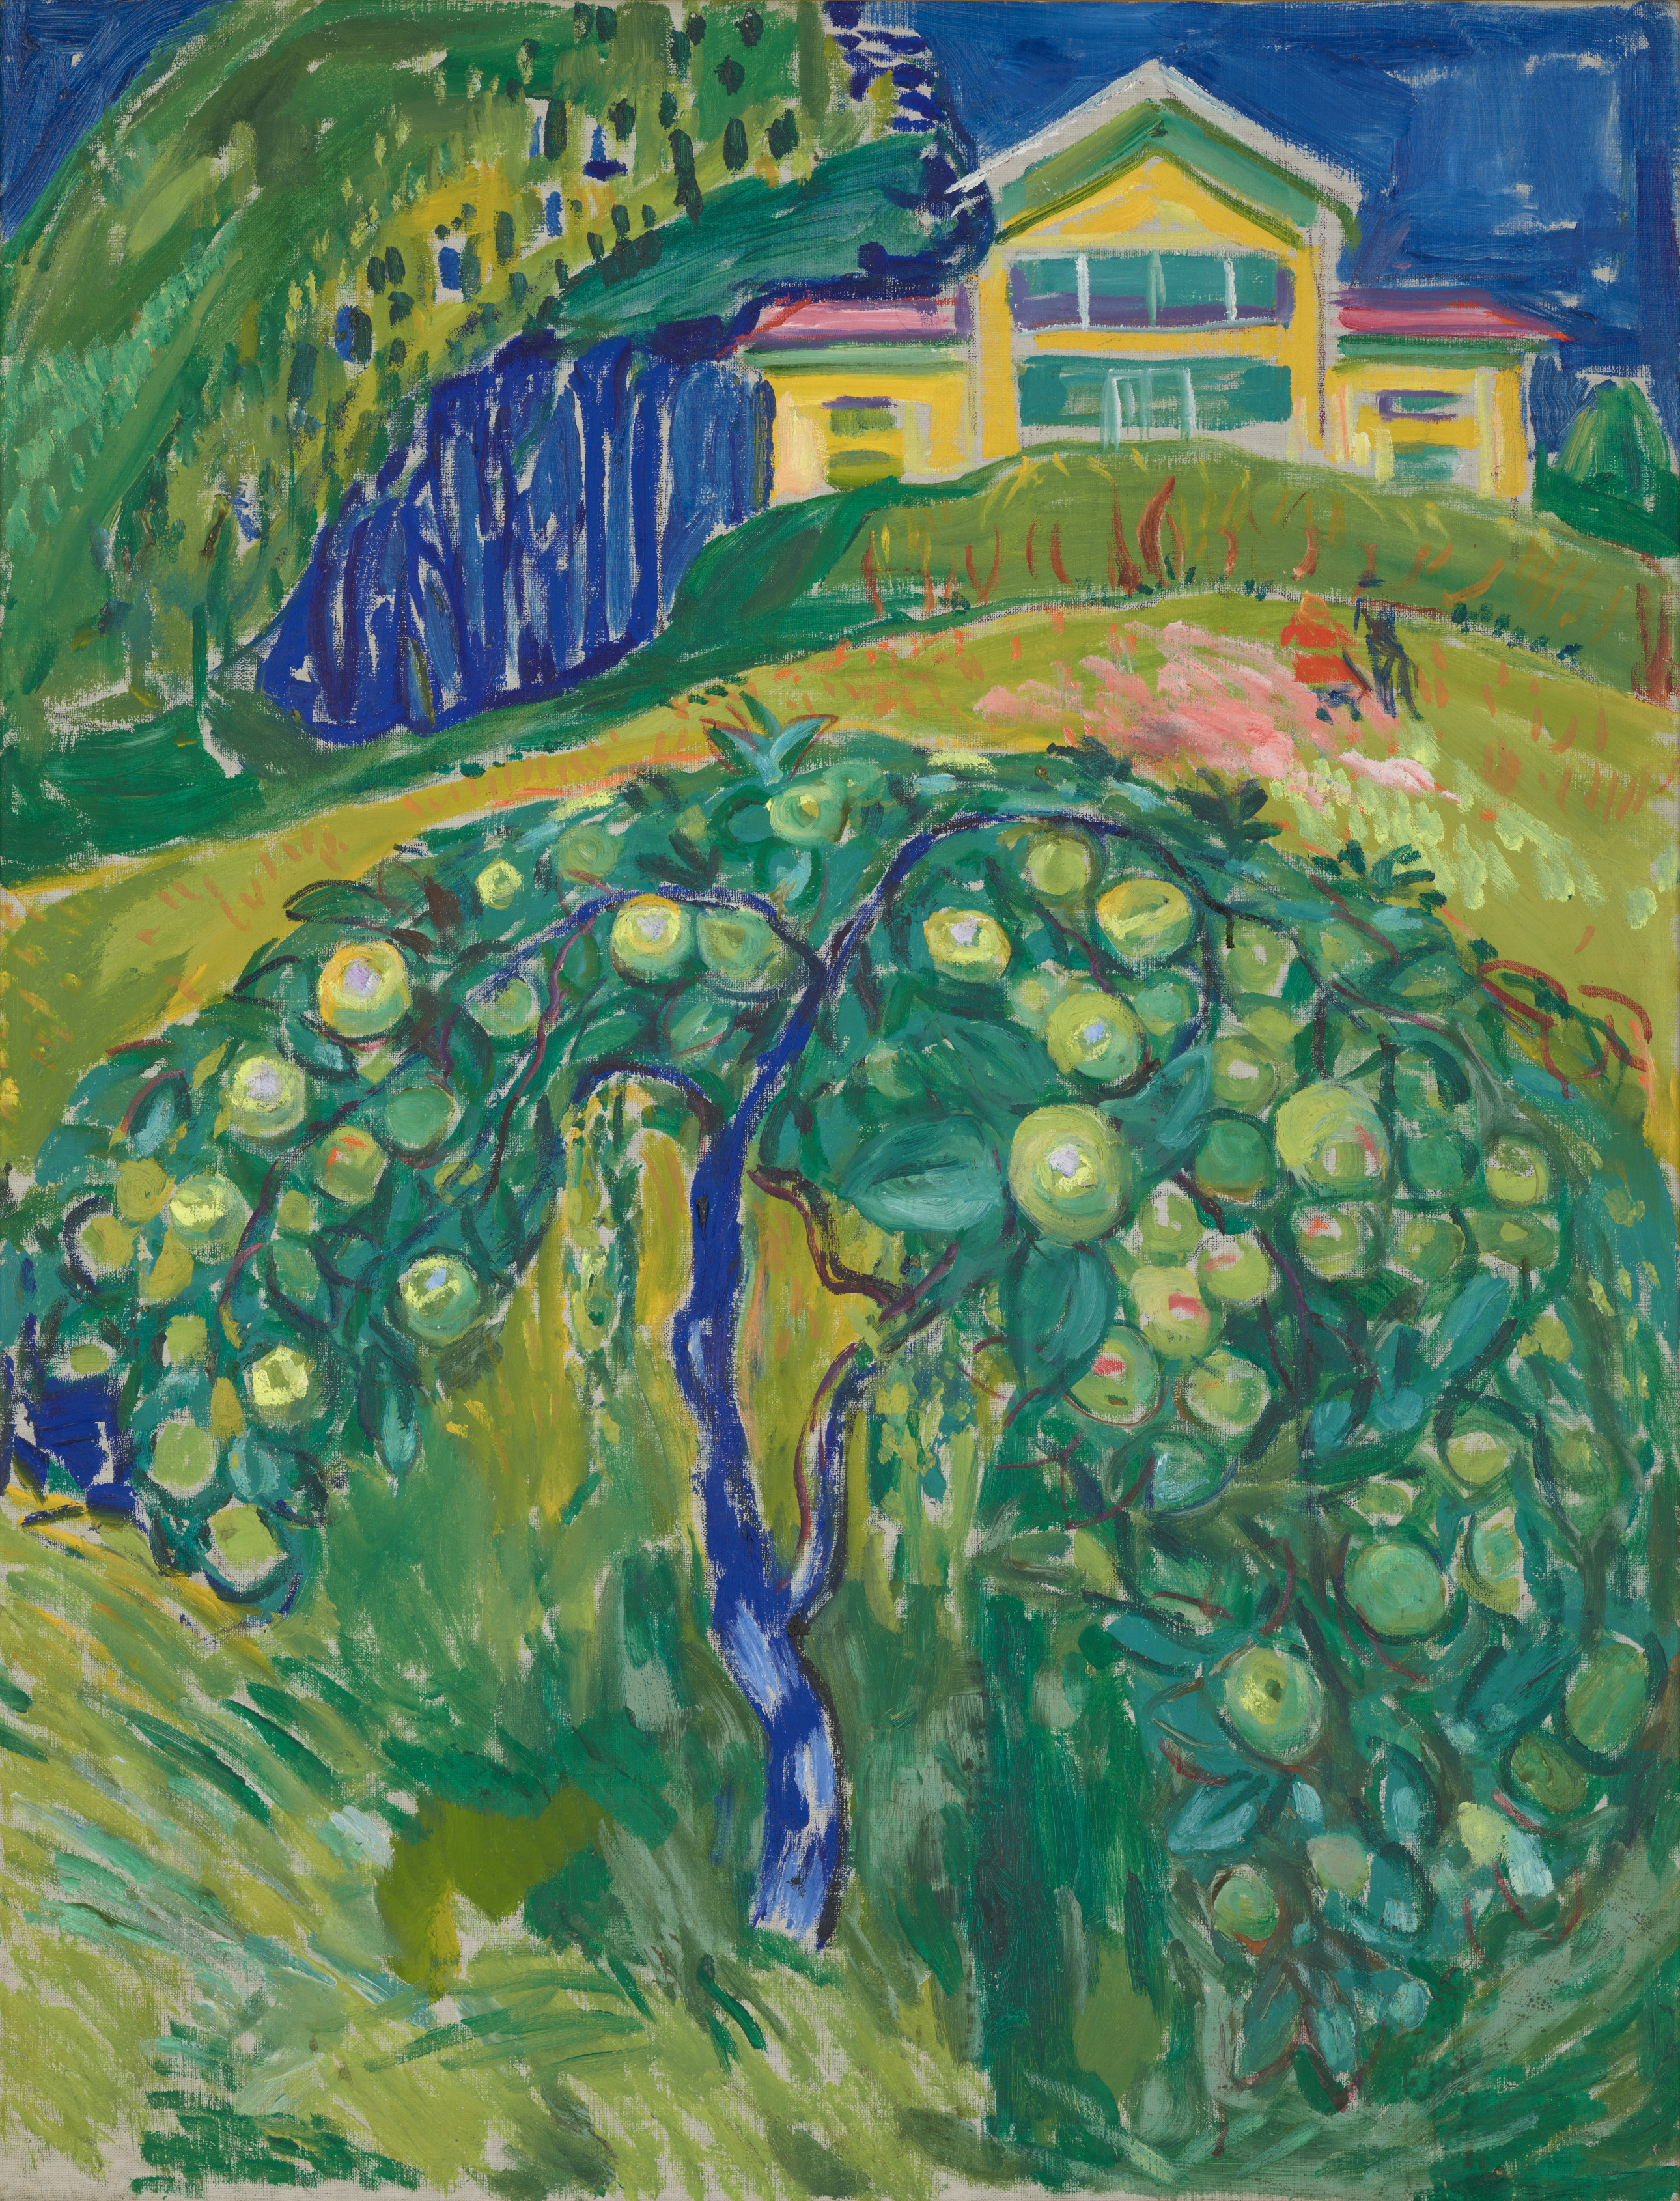 Edvard Munch: Apple Tree in the Garden. Oil on canvas, 1932-42. Photo © Munchmuseet